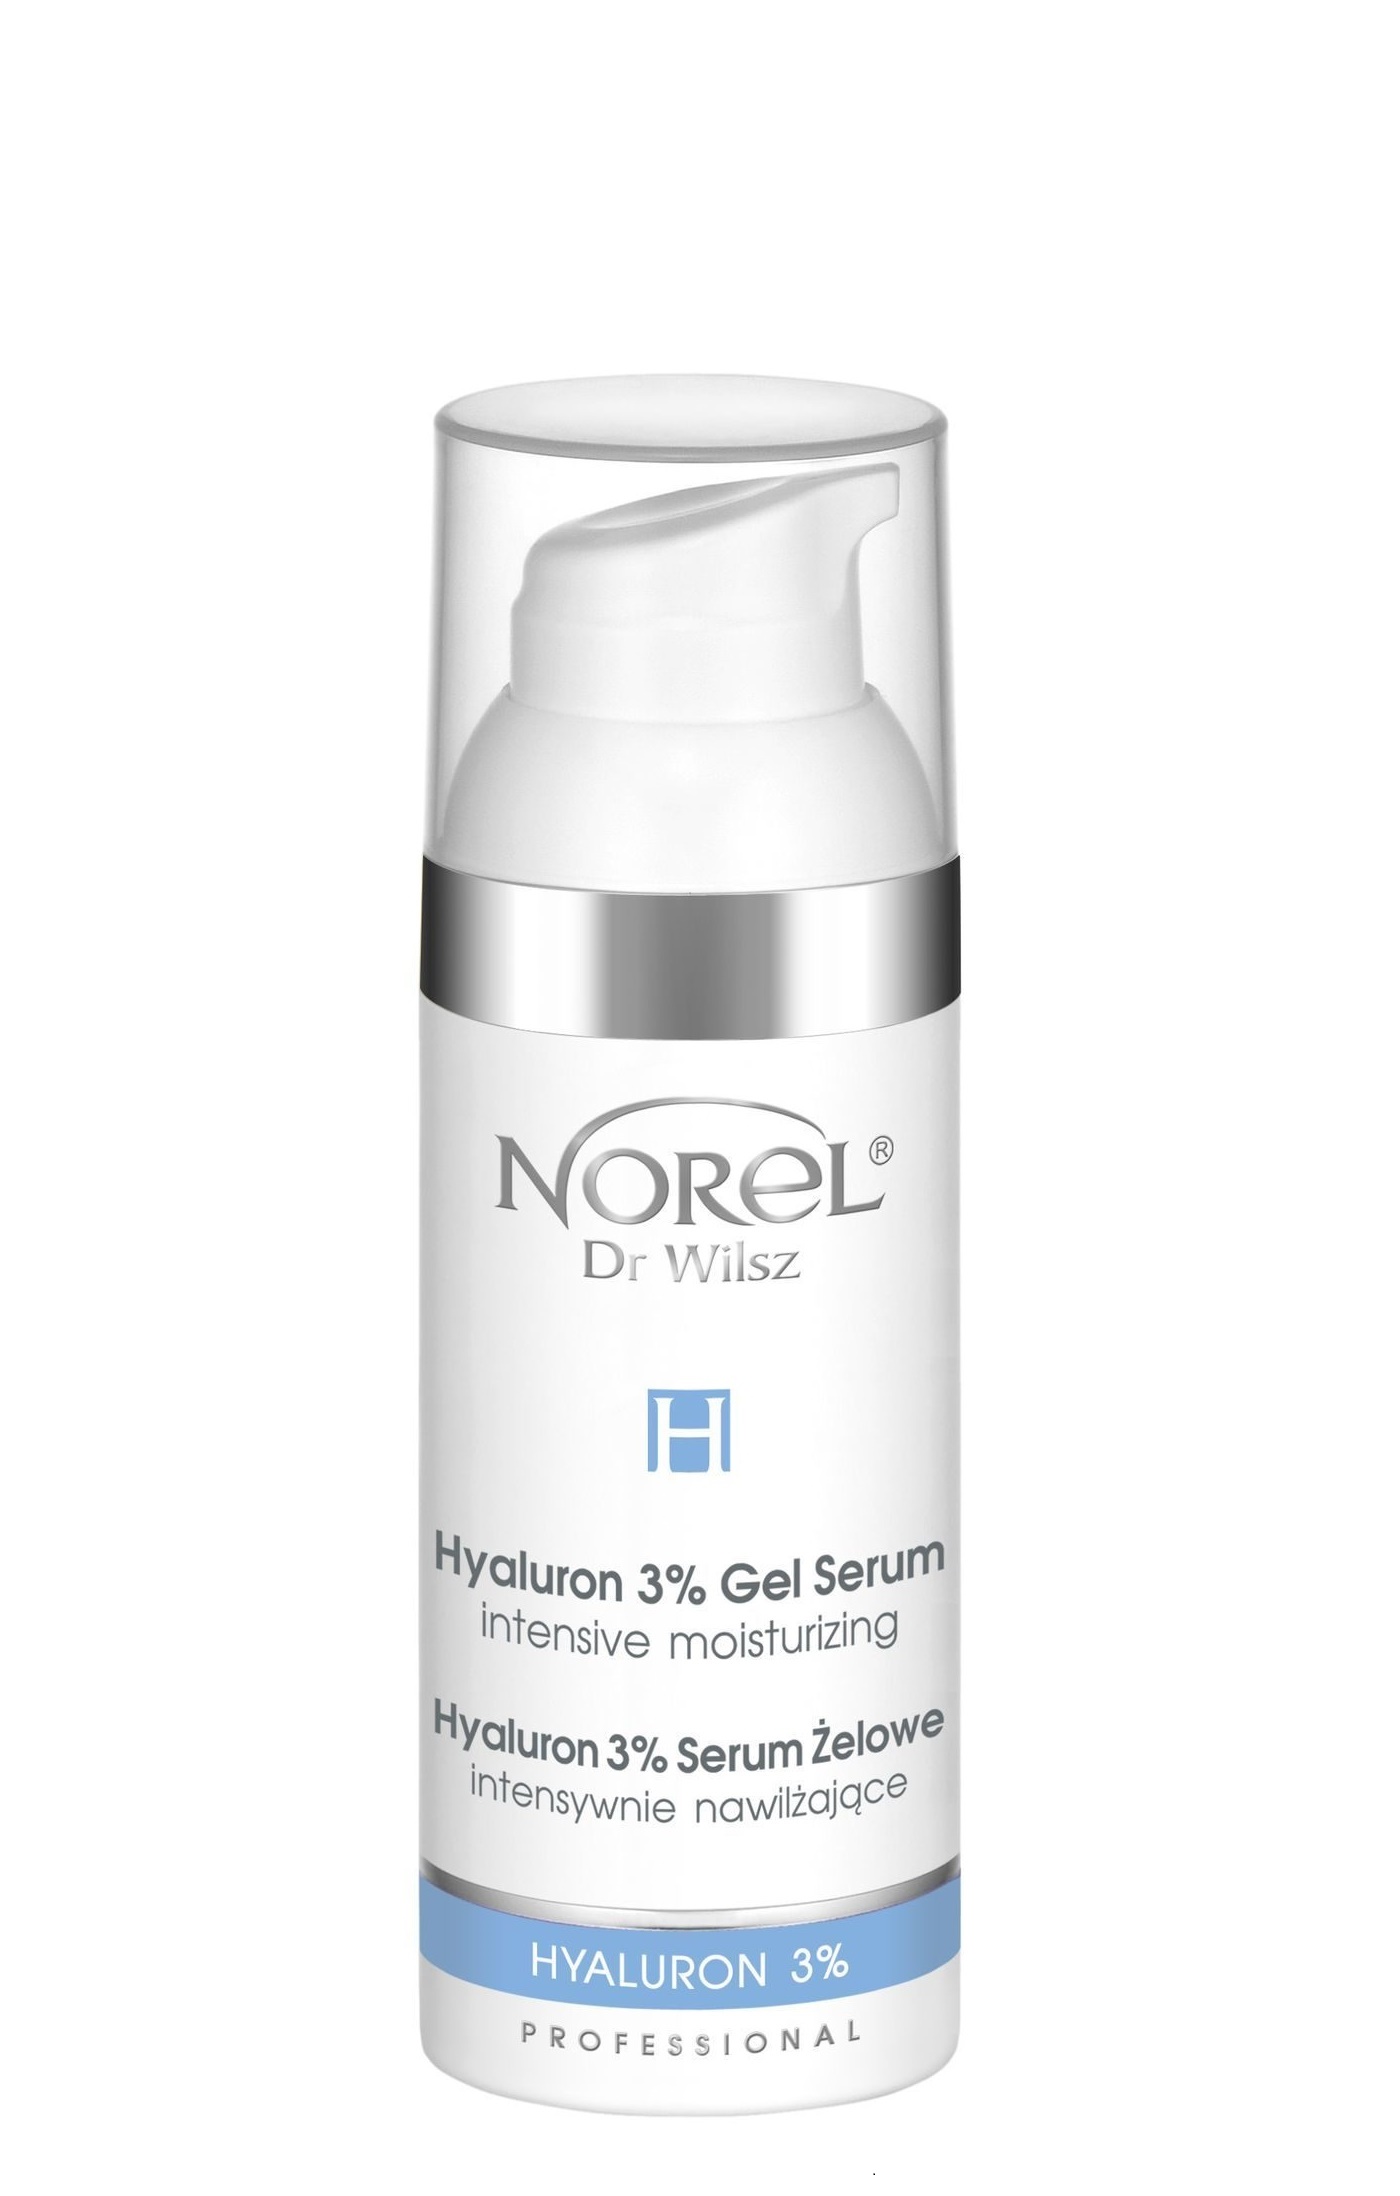 Norel Hyaluron 3% Gel Serum-Intensive Moisturizing. Norel Dr Wilsz очищающее молочко Hyaluron Plus. Сыворотка увлажняющая (50 мл). Concentrate интенсивная сыворотка гиалуроновая. Увлажняющая сыворотка против морщин